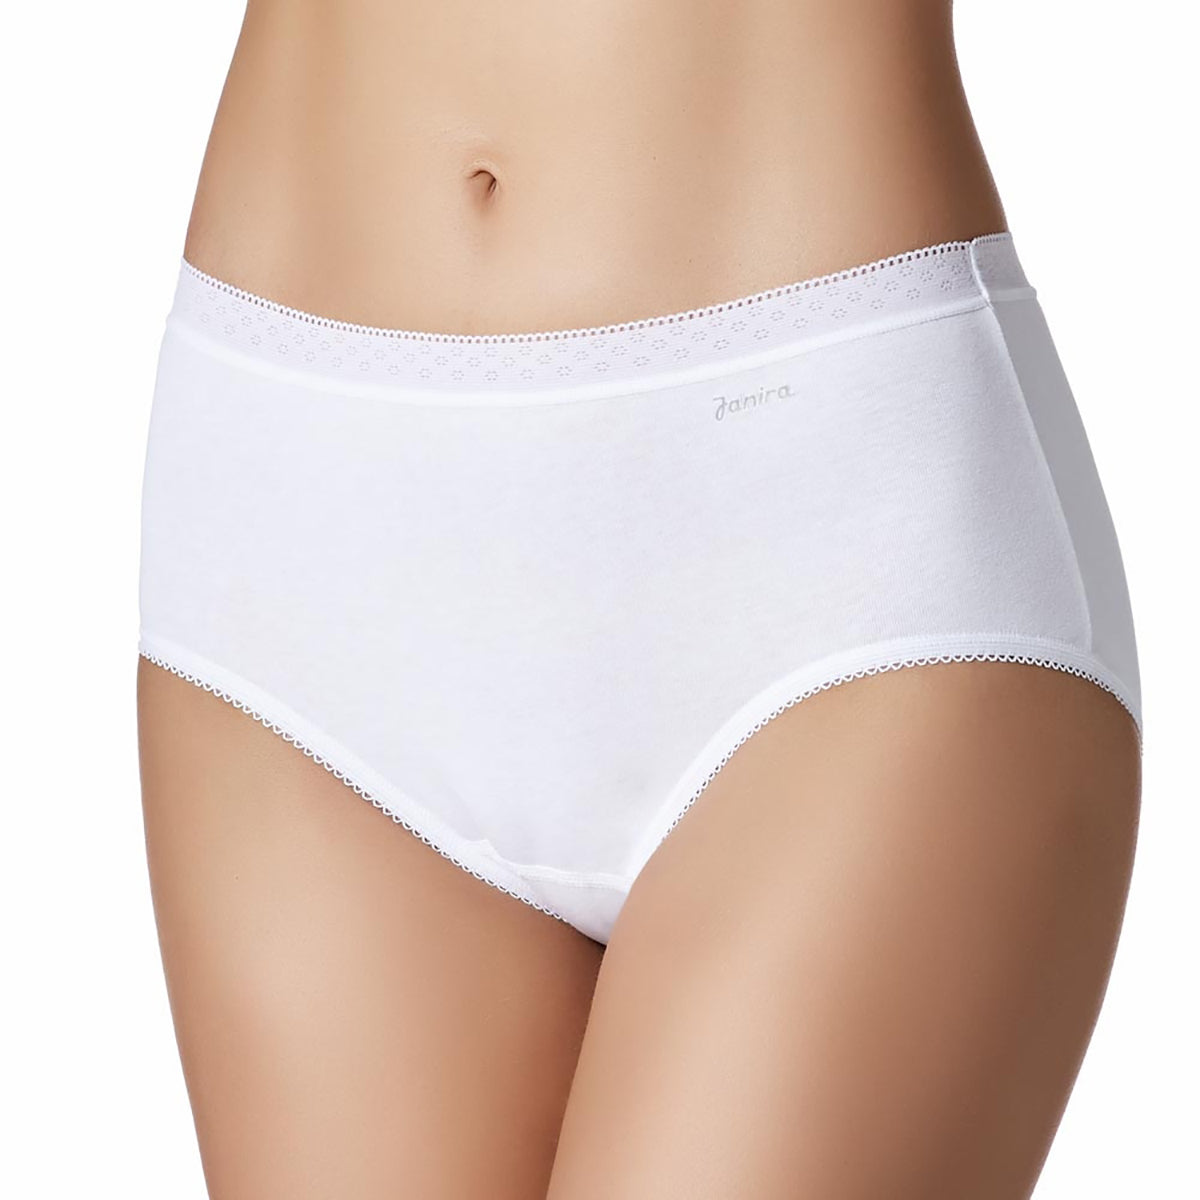 Janira essential cotton panty brief lingerie canada in white bride bridal underwear linea intima multi pack